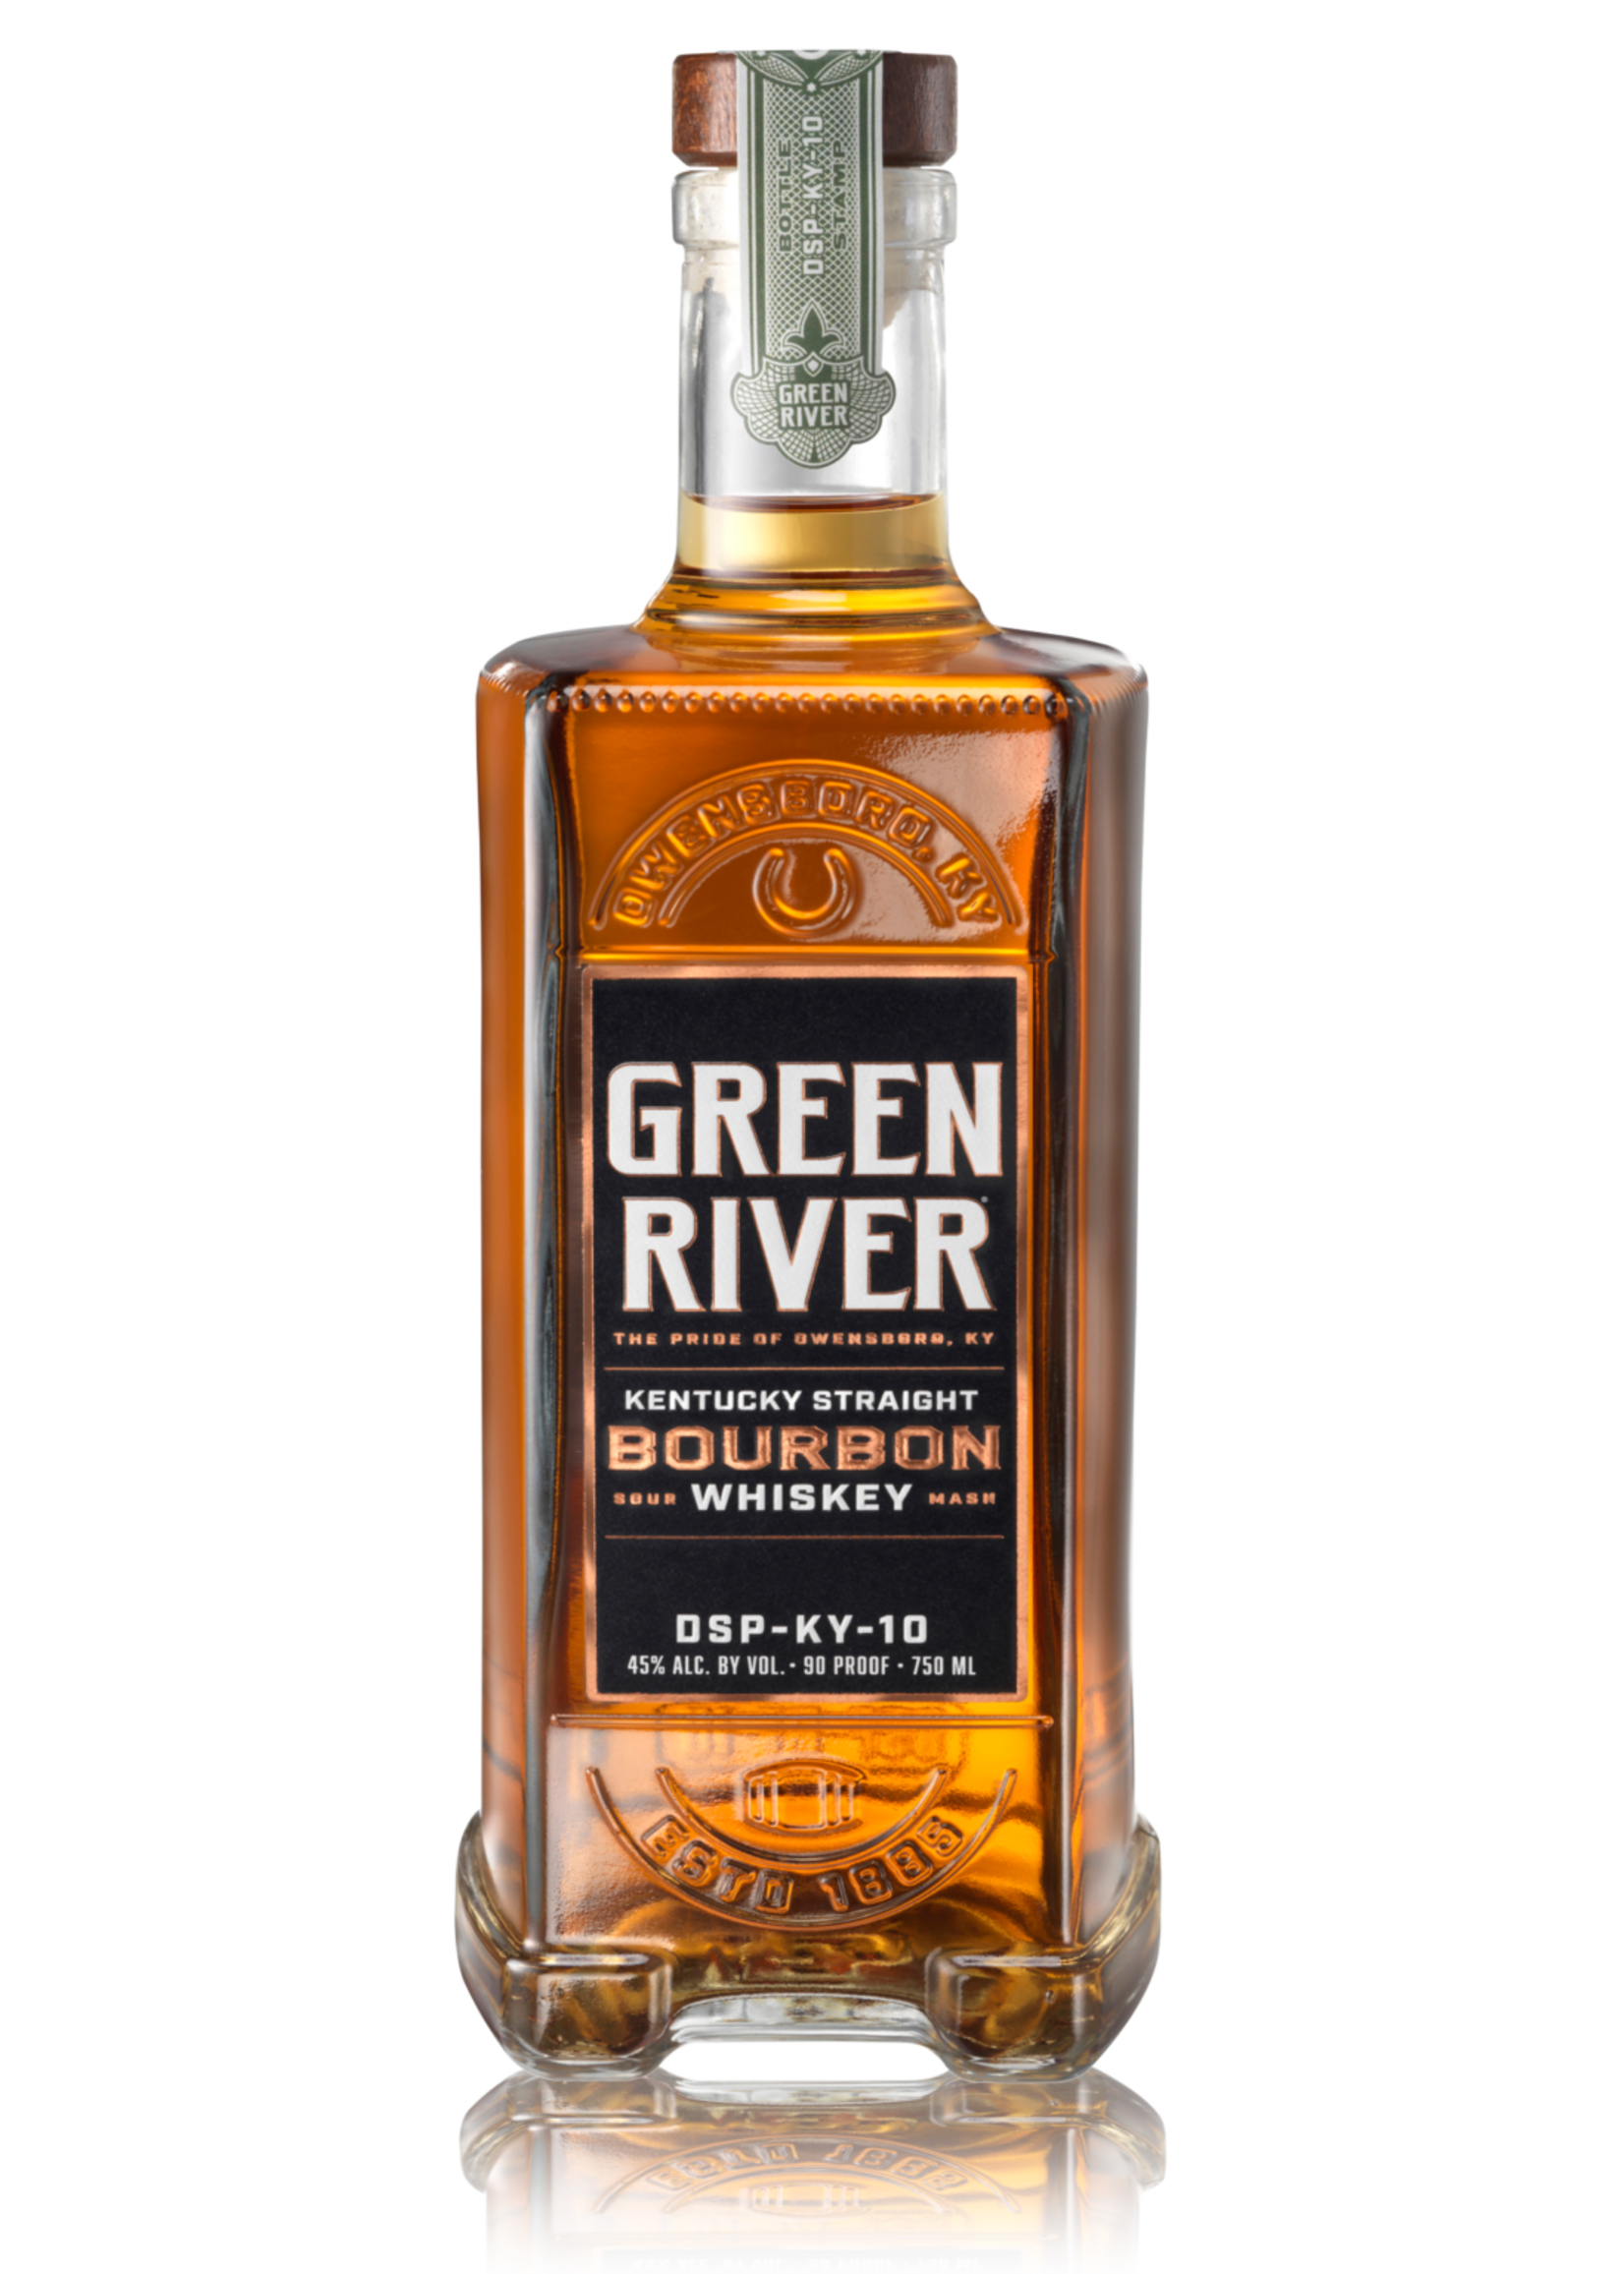 Green River Green River / Kentucky Straight Bourbon 45% abv / 750mL